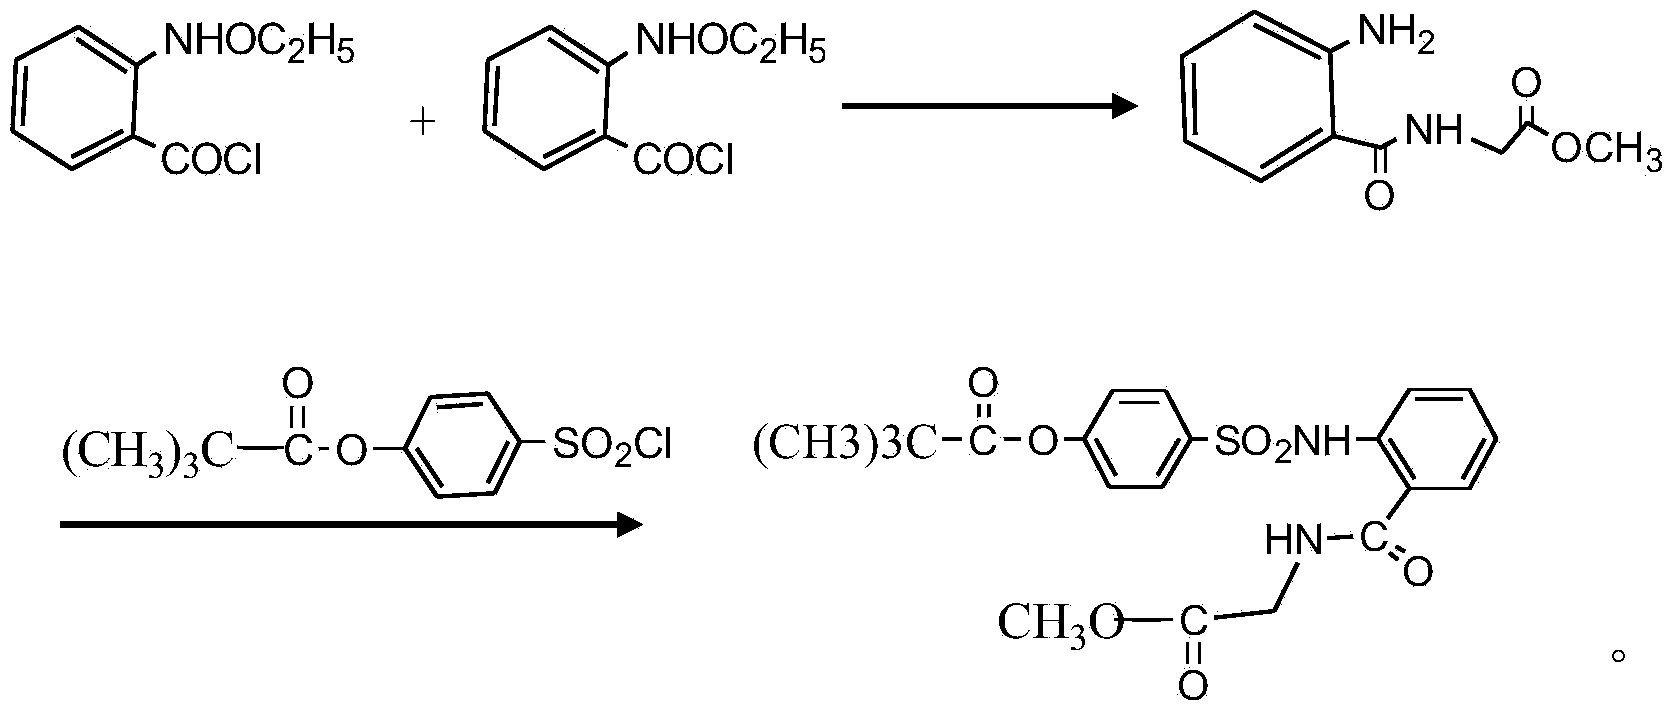 Preparation method of sivelestat sodium hydrate intermediate